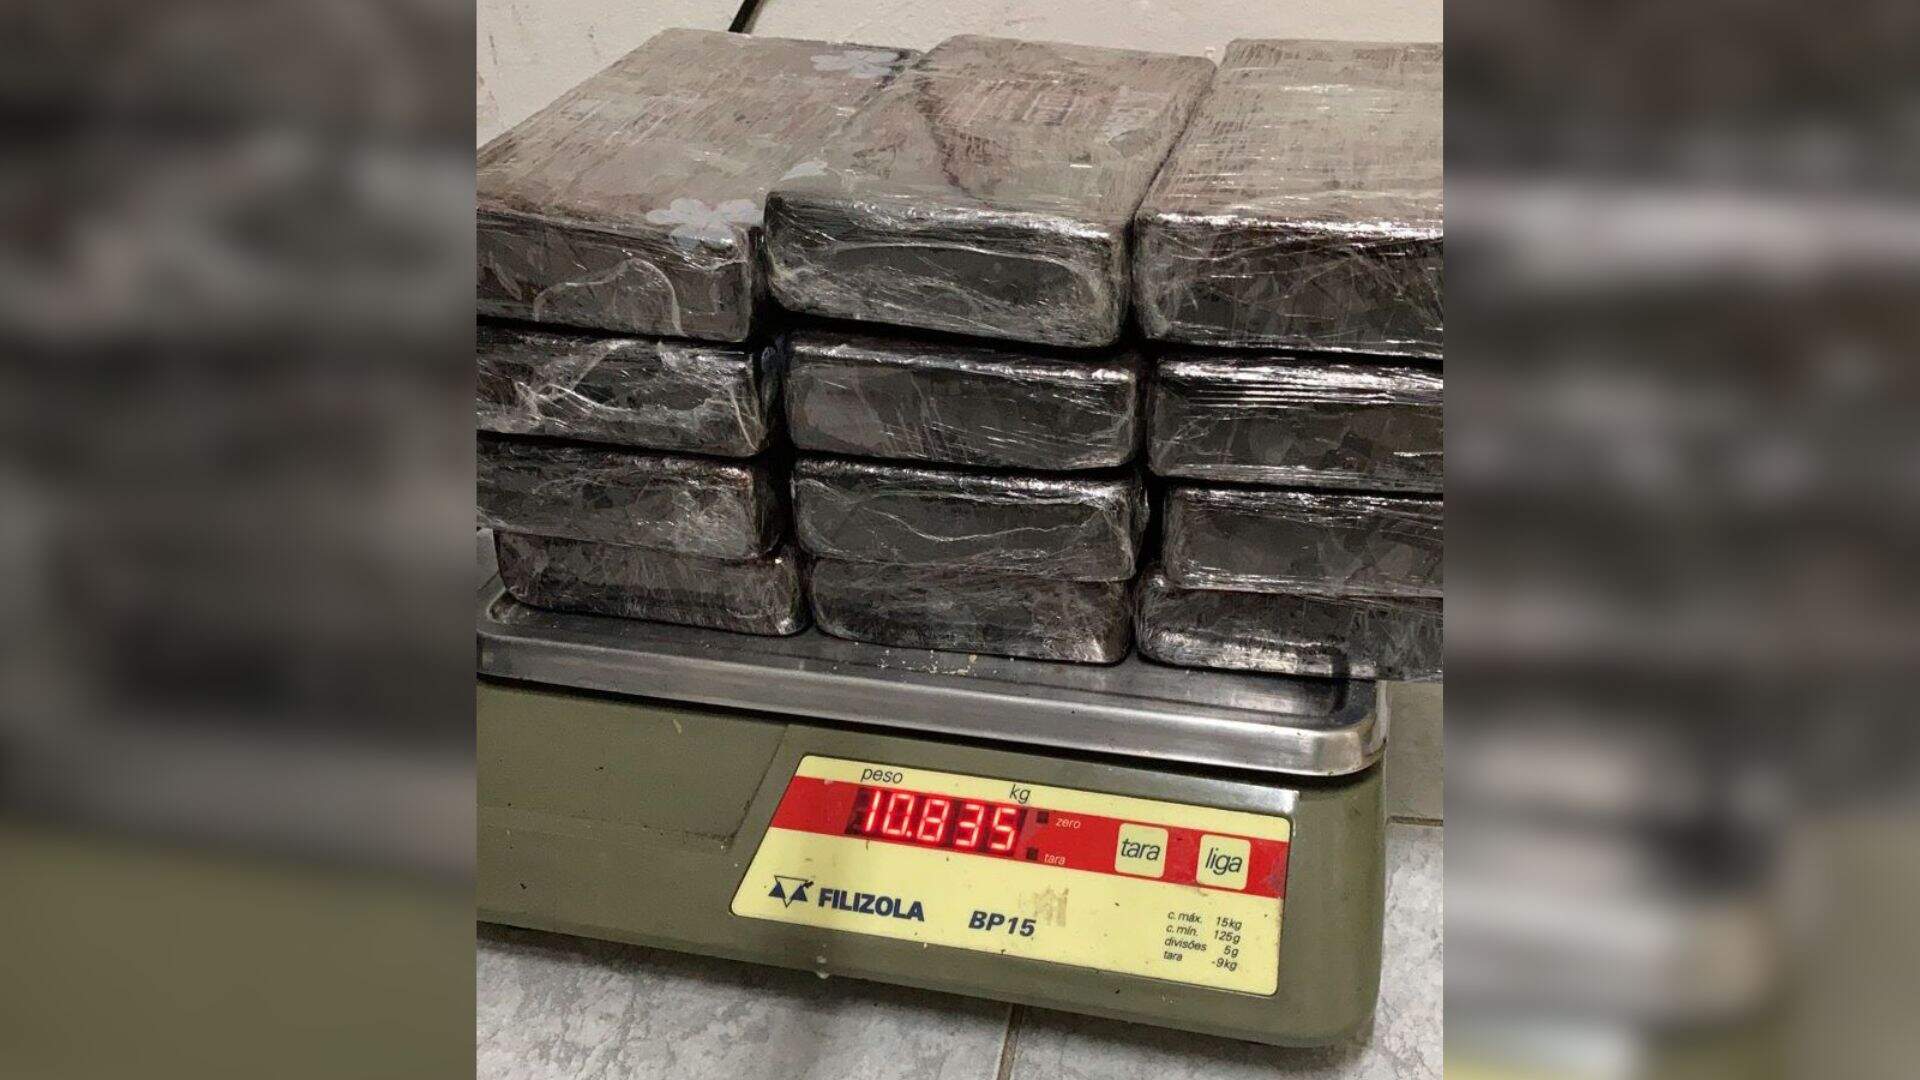 Polícia Federal apreende 11 kg de cocaína na rodoviária de Corumbá